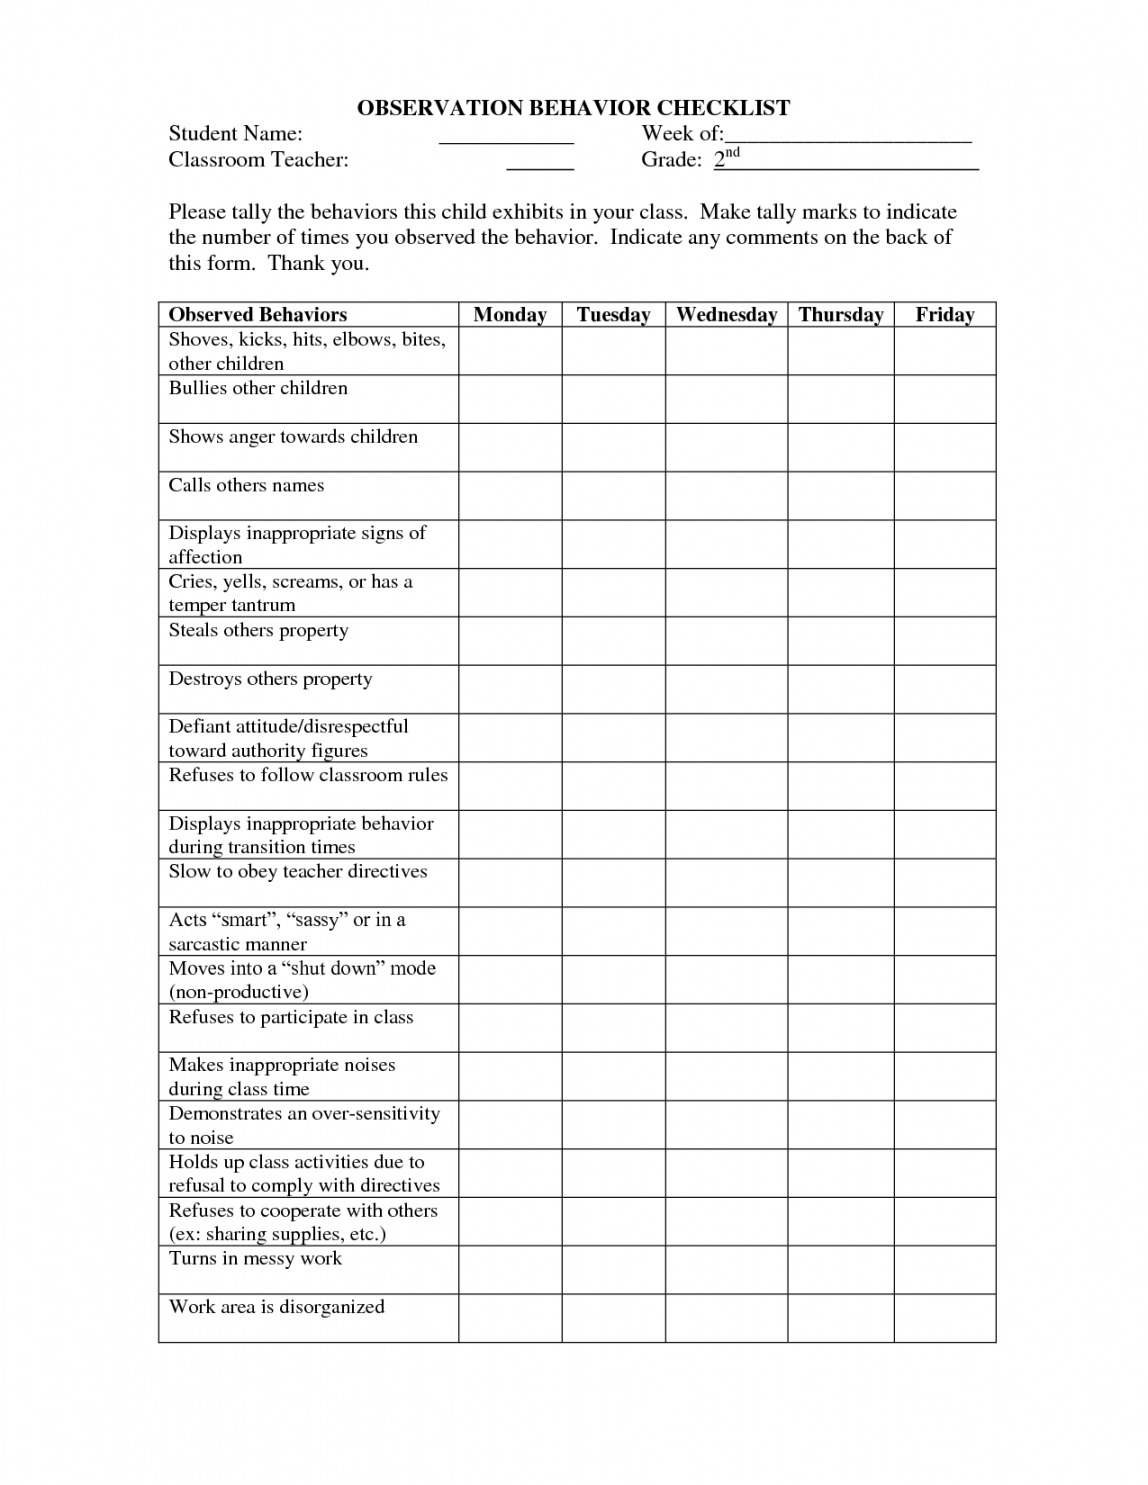 free behavior checklist templatesx @ legacy 614 codes database  痞客邦 functional behavior assessment checklist template samples